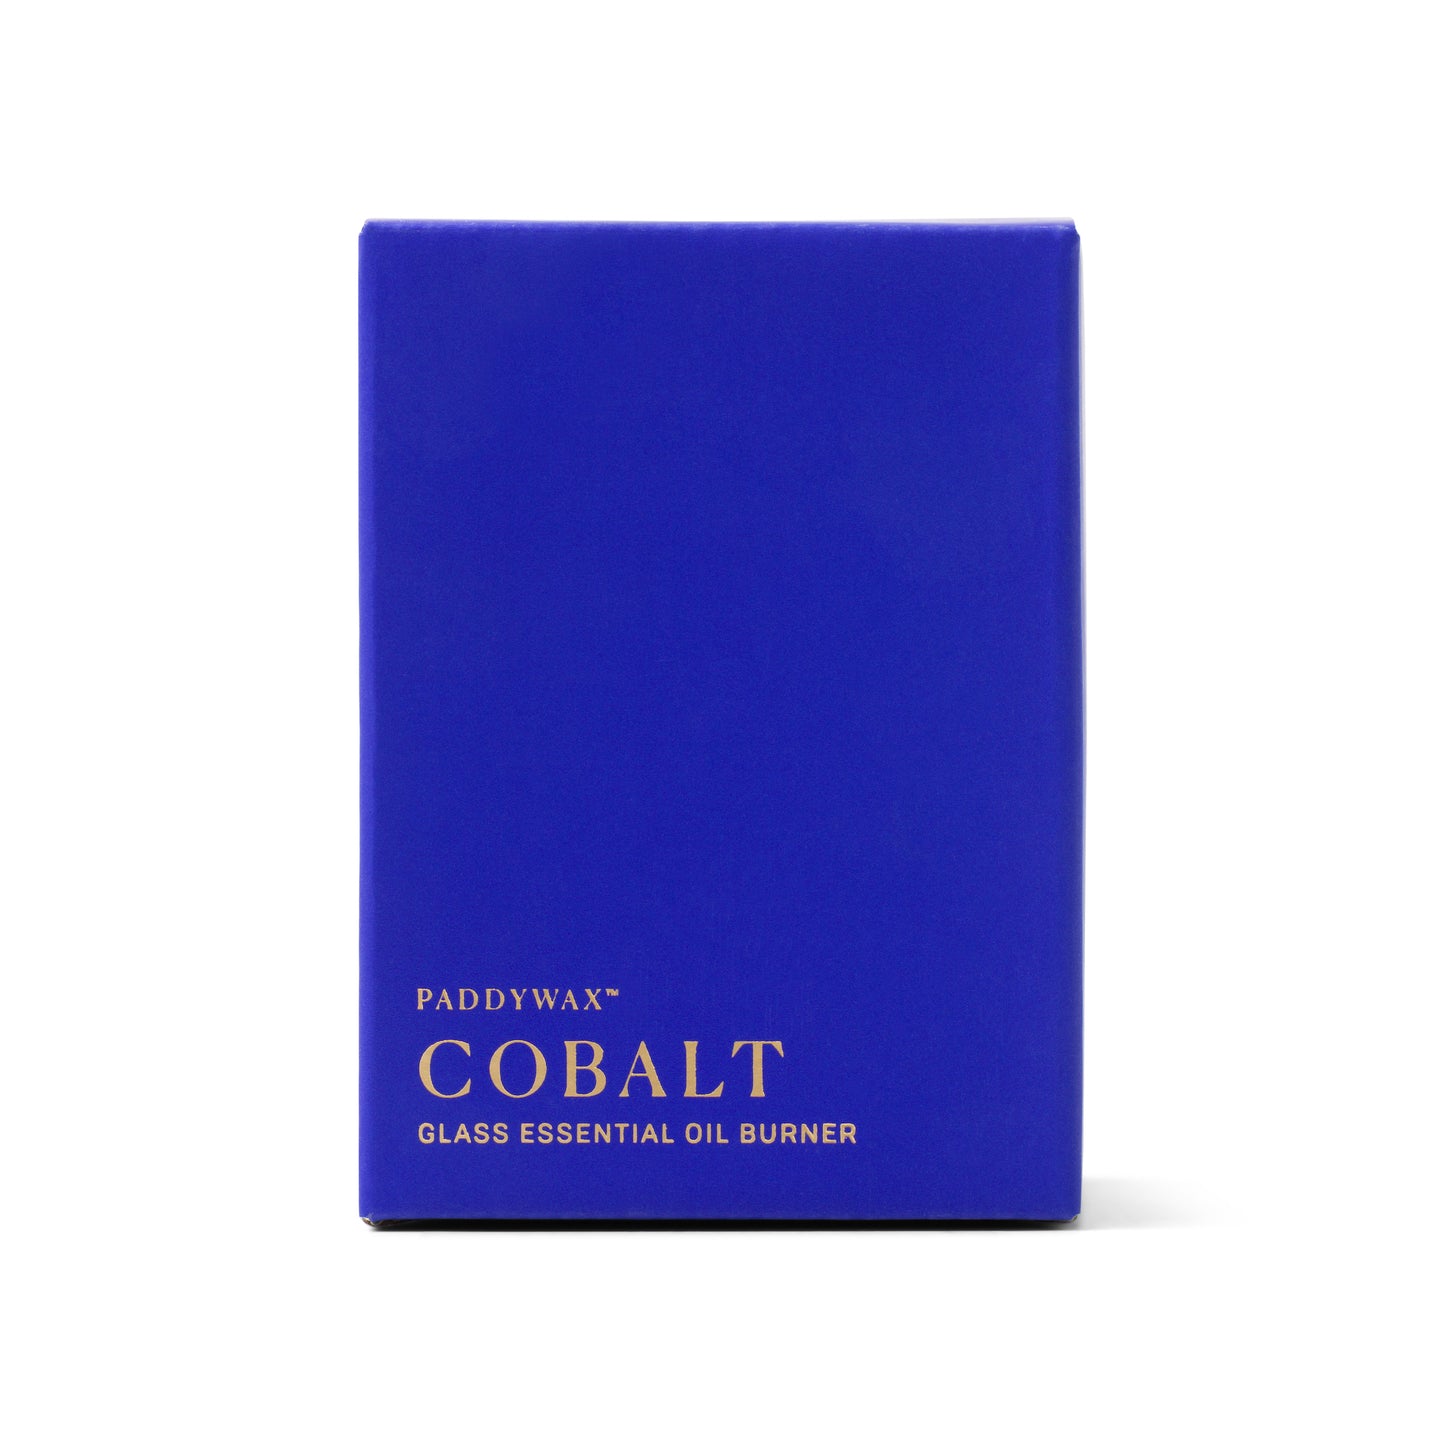 Essential Oil Burner & Tea Light Candle - Cobalt Blue Glass box front view